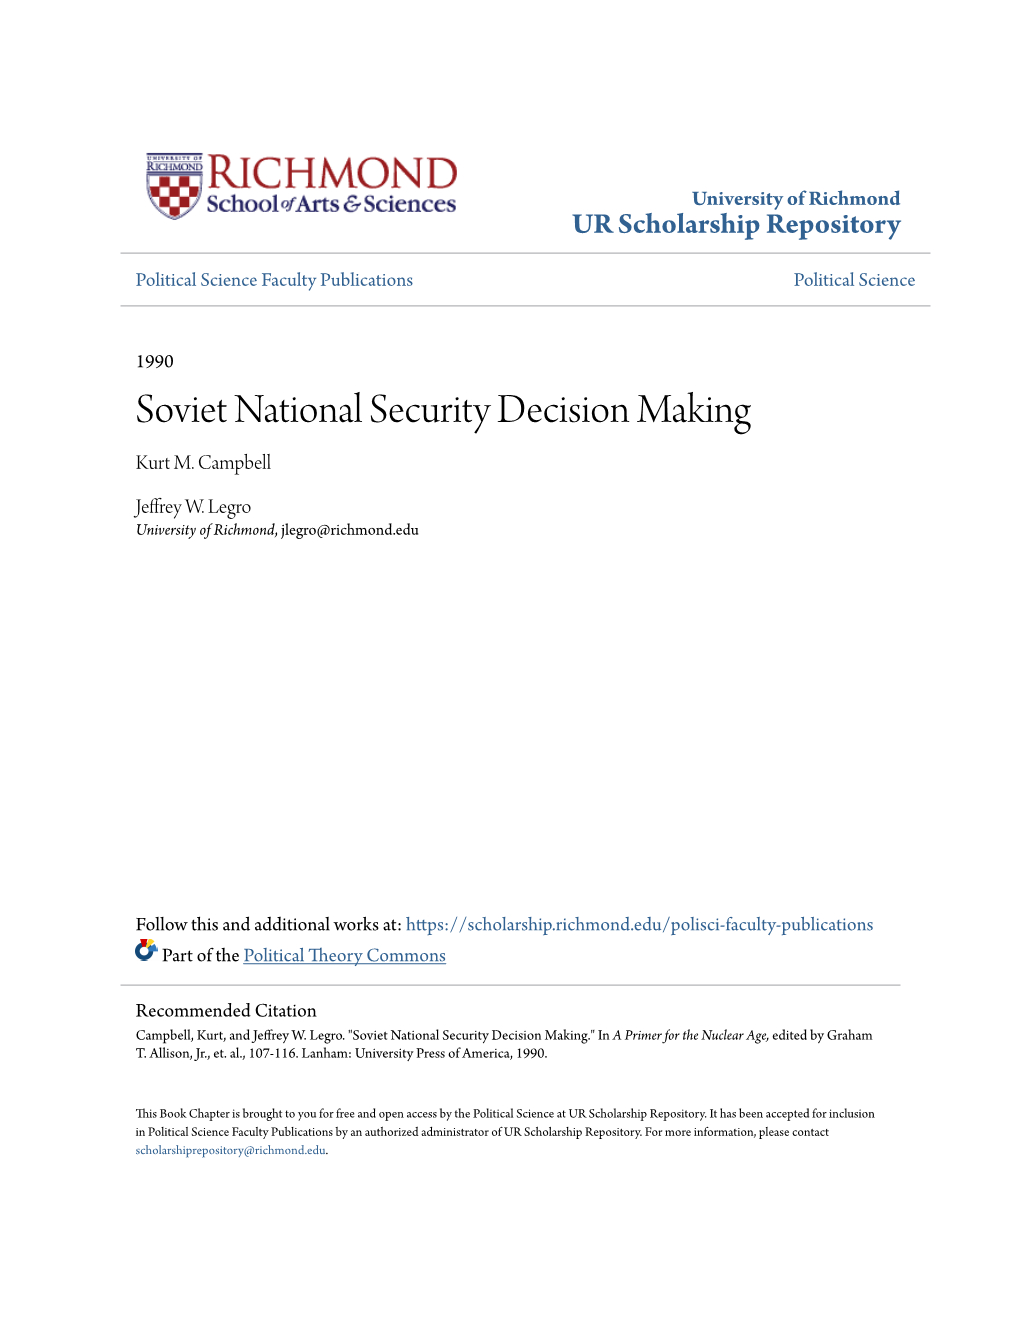 Soviet National Security Decision Making Kurt M